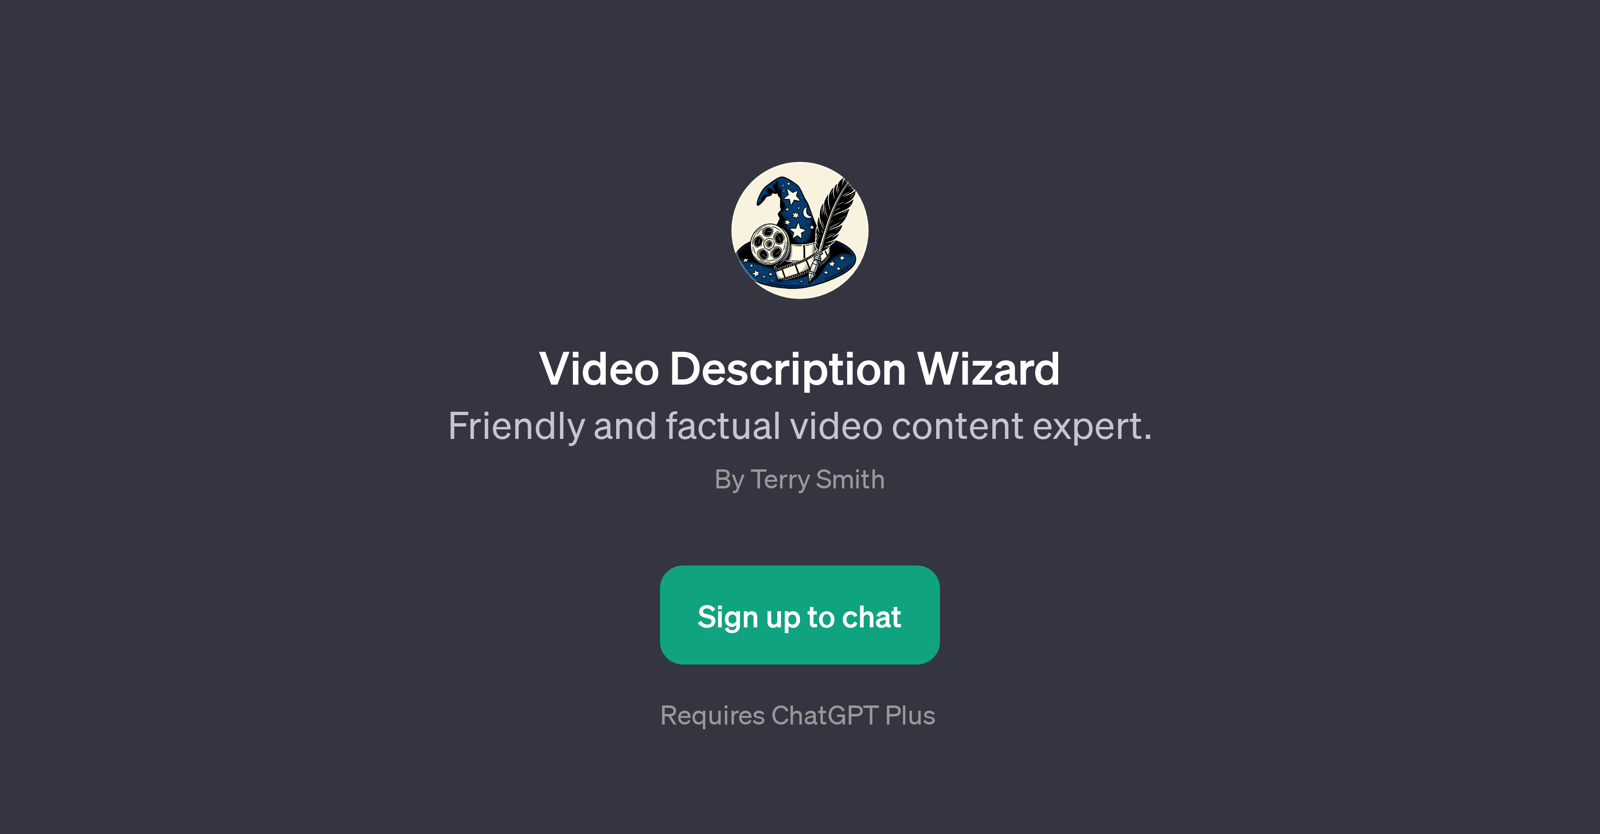 Video Description Wizard website